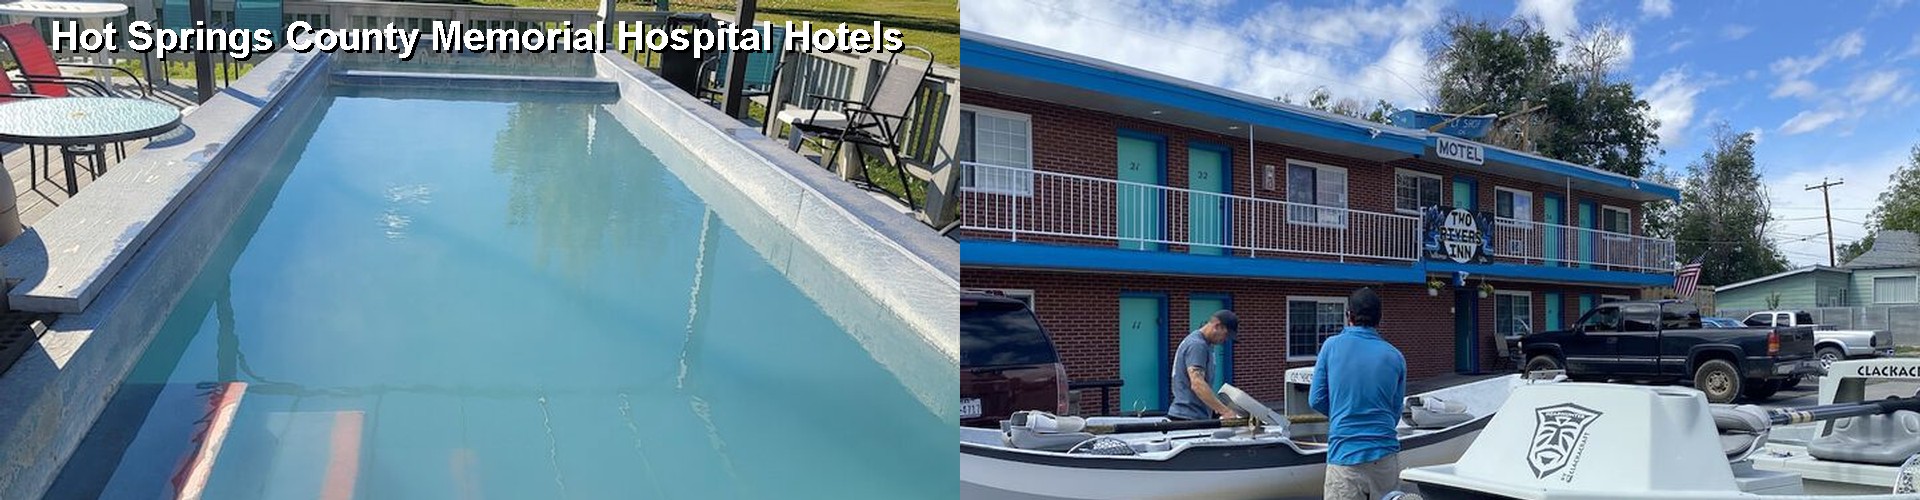 3 Best Hotels near Hot Springs County Memorial Hospital